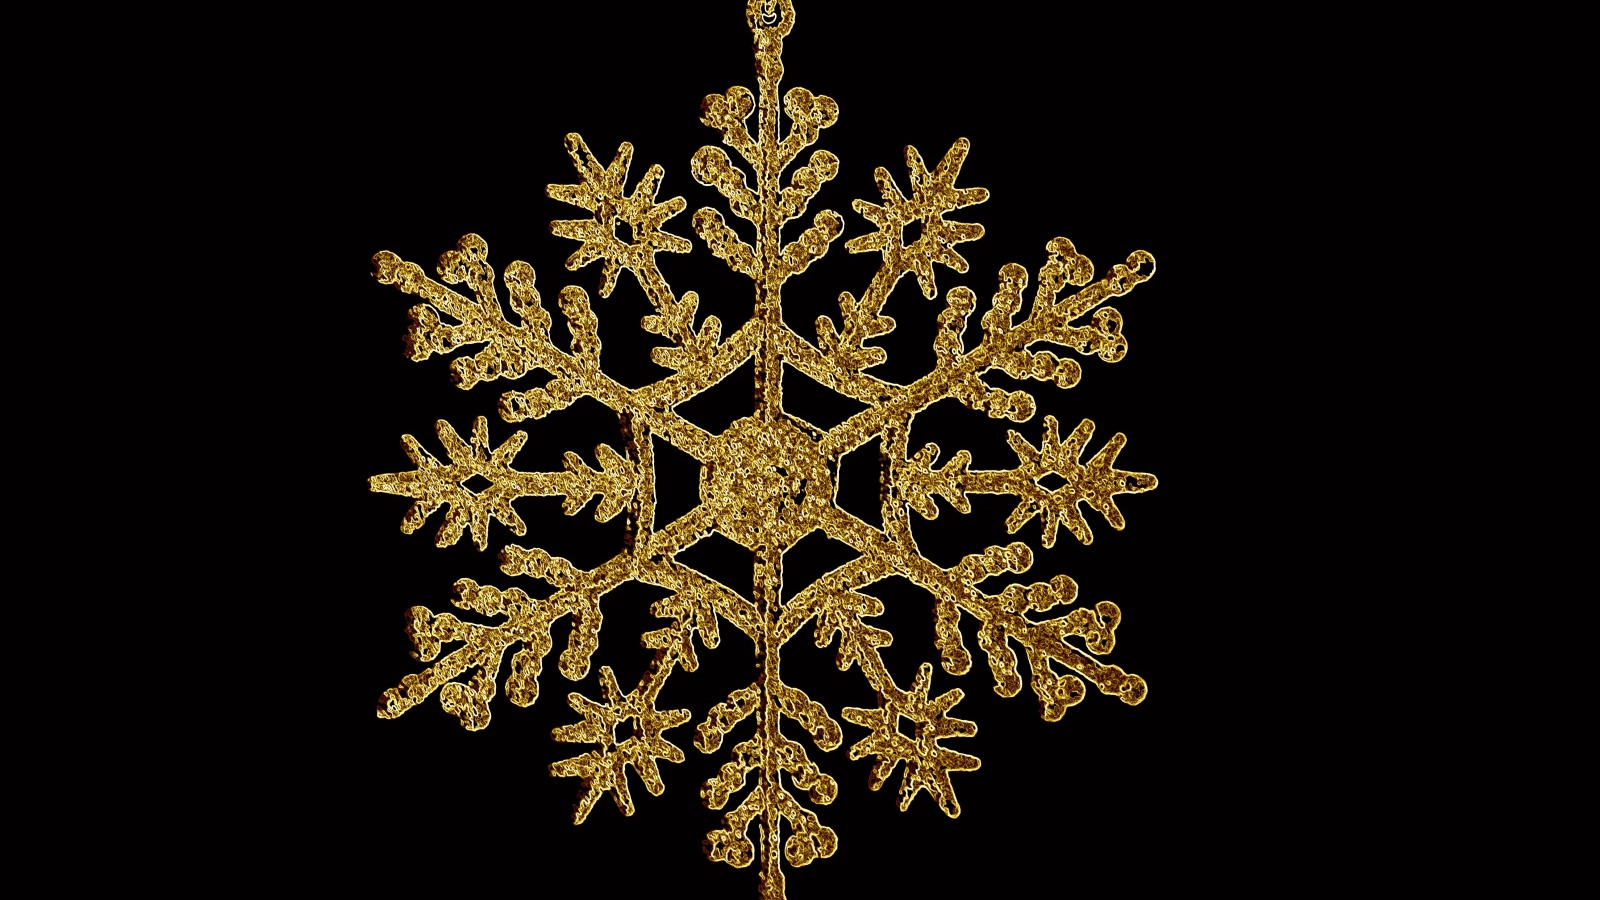 Golden snowflake on black background